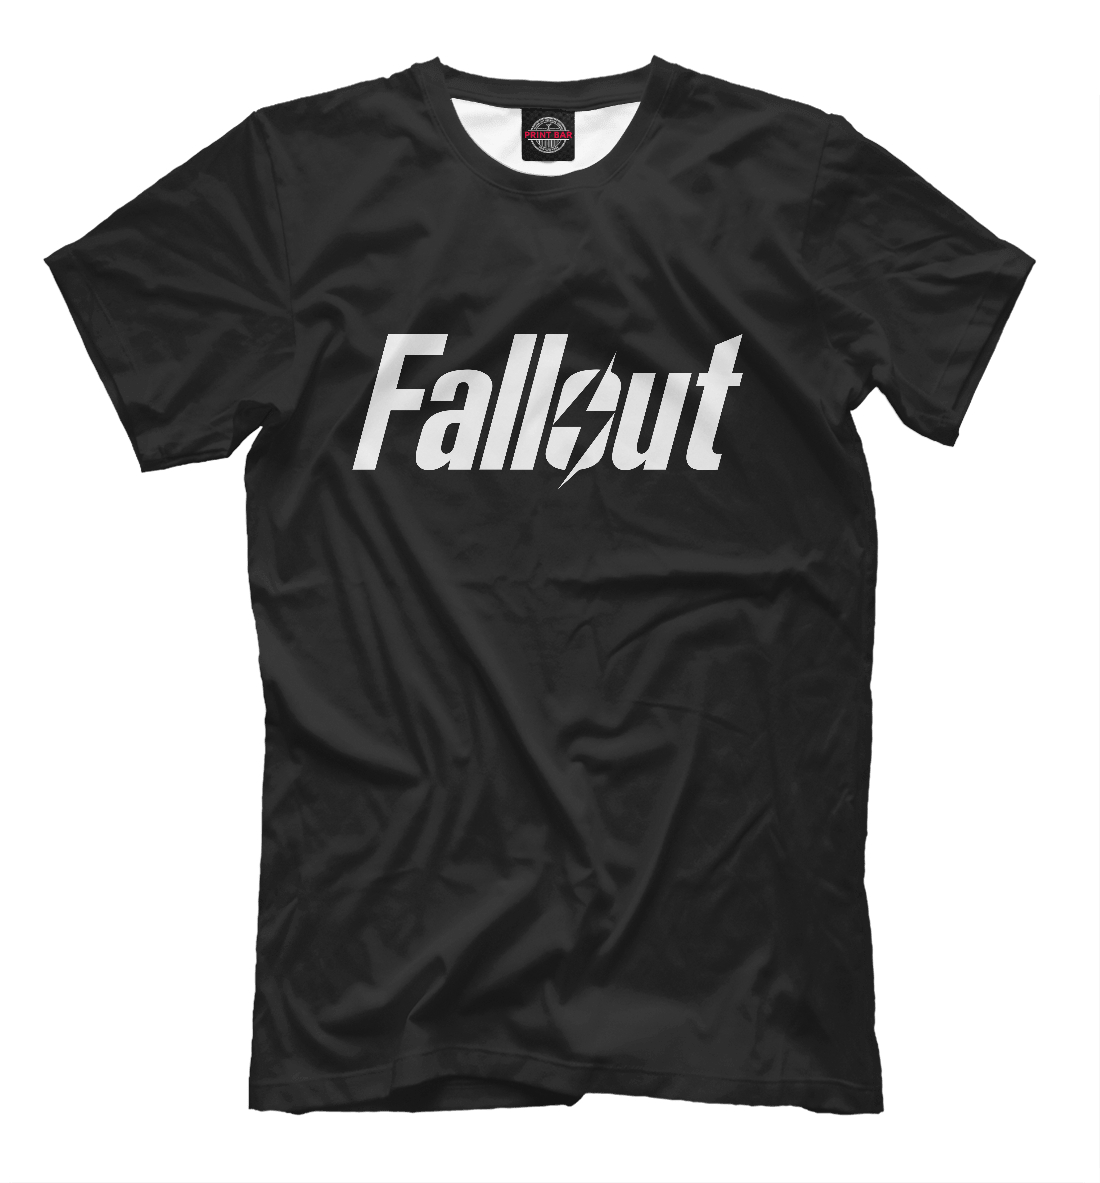 Футболка Fallout для мальчиков, артикул: FOT-773500-fut-2mp